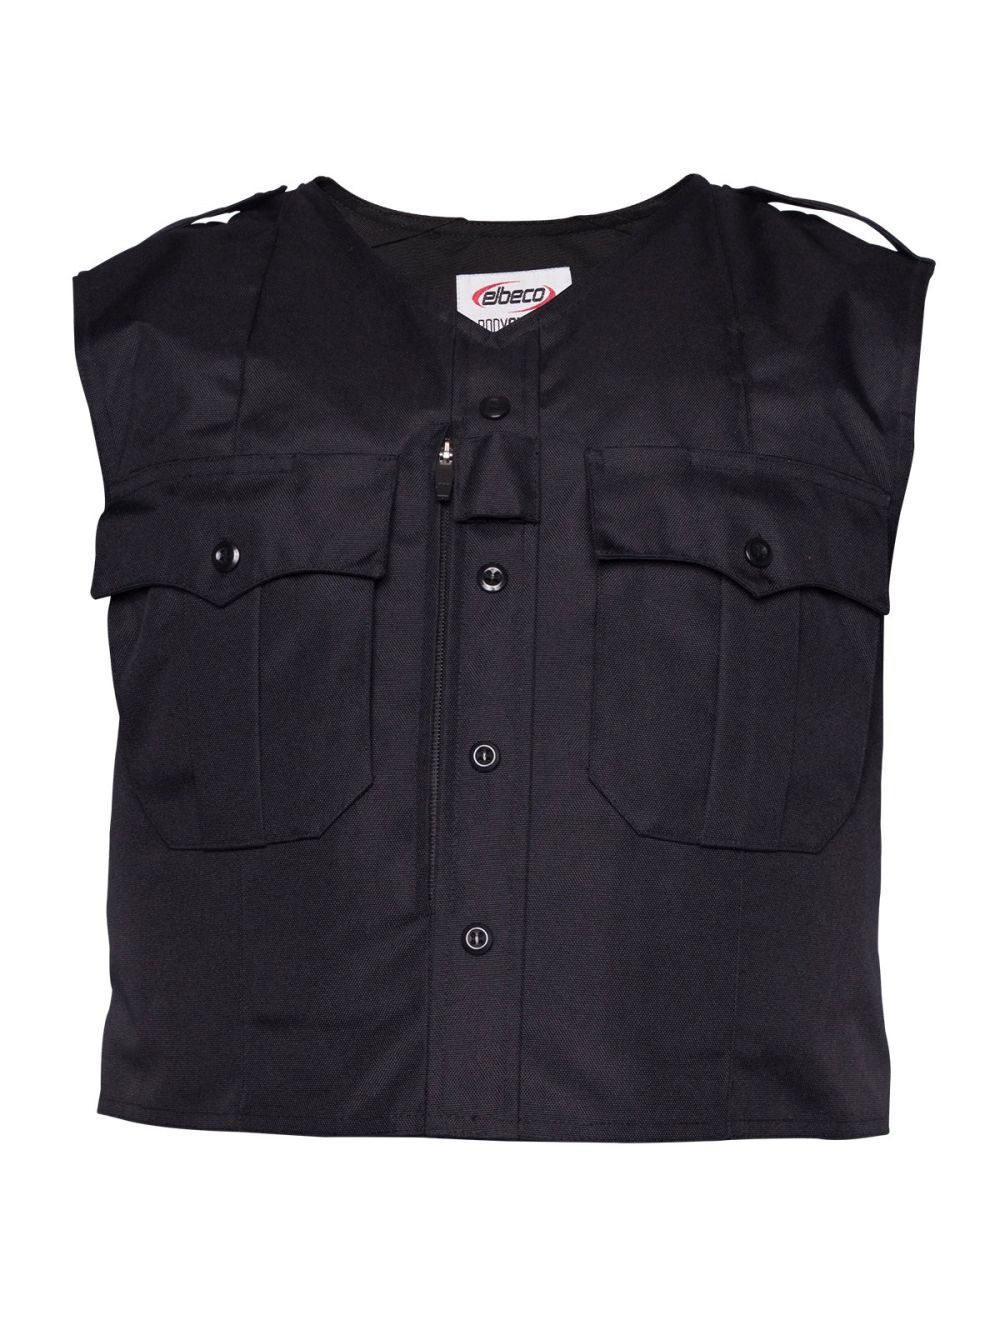 BodyShield External Vest Carrier-Black